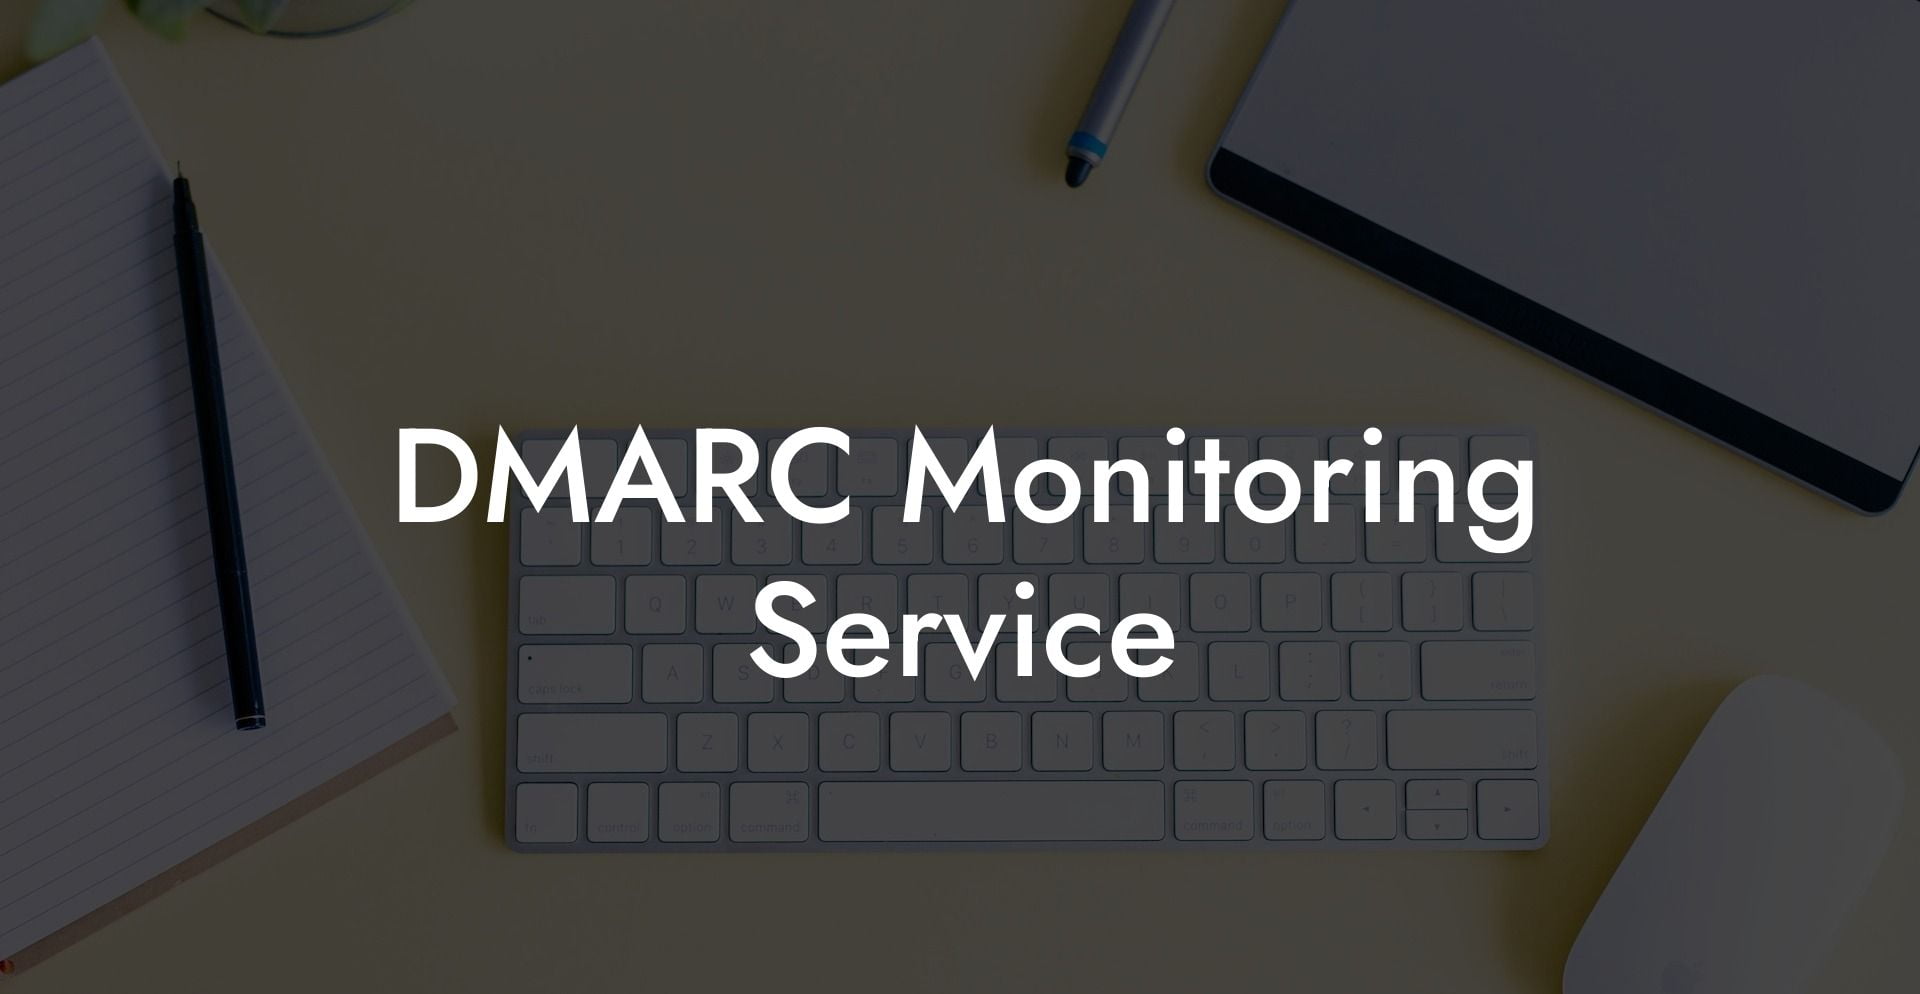 DMARC Monitoring Service